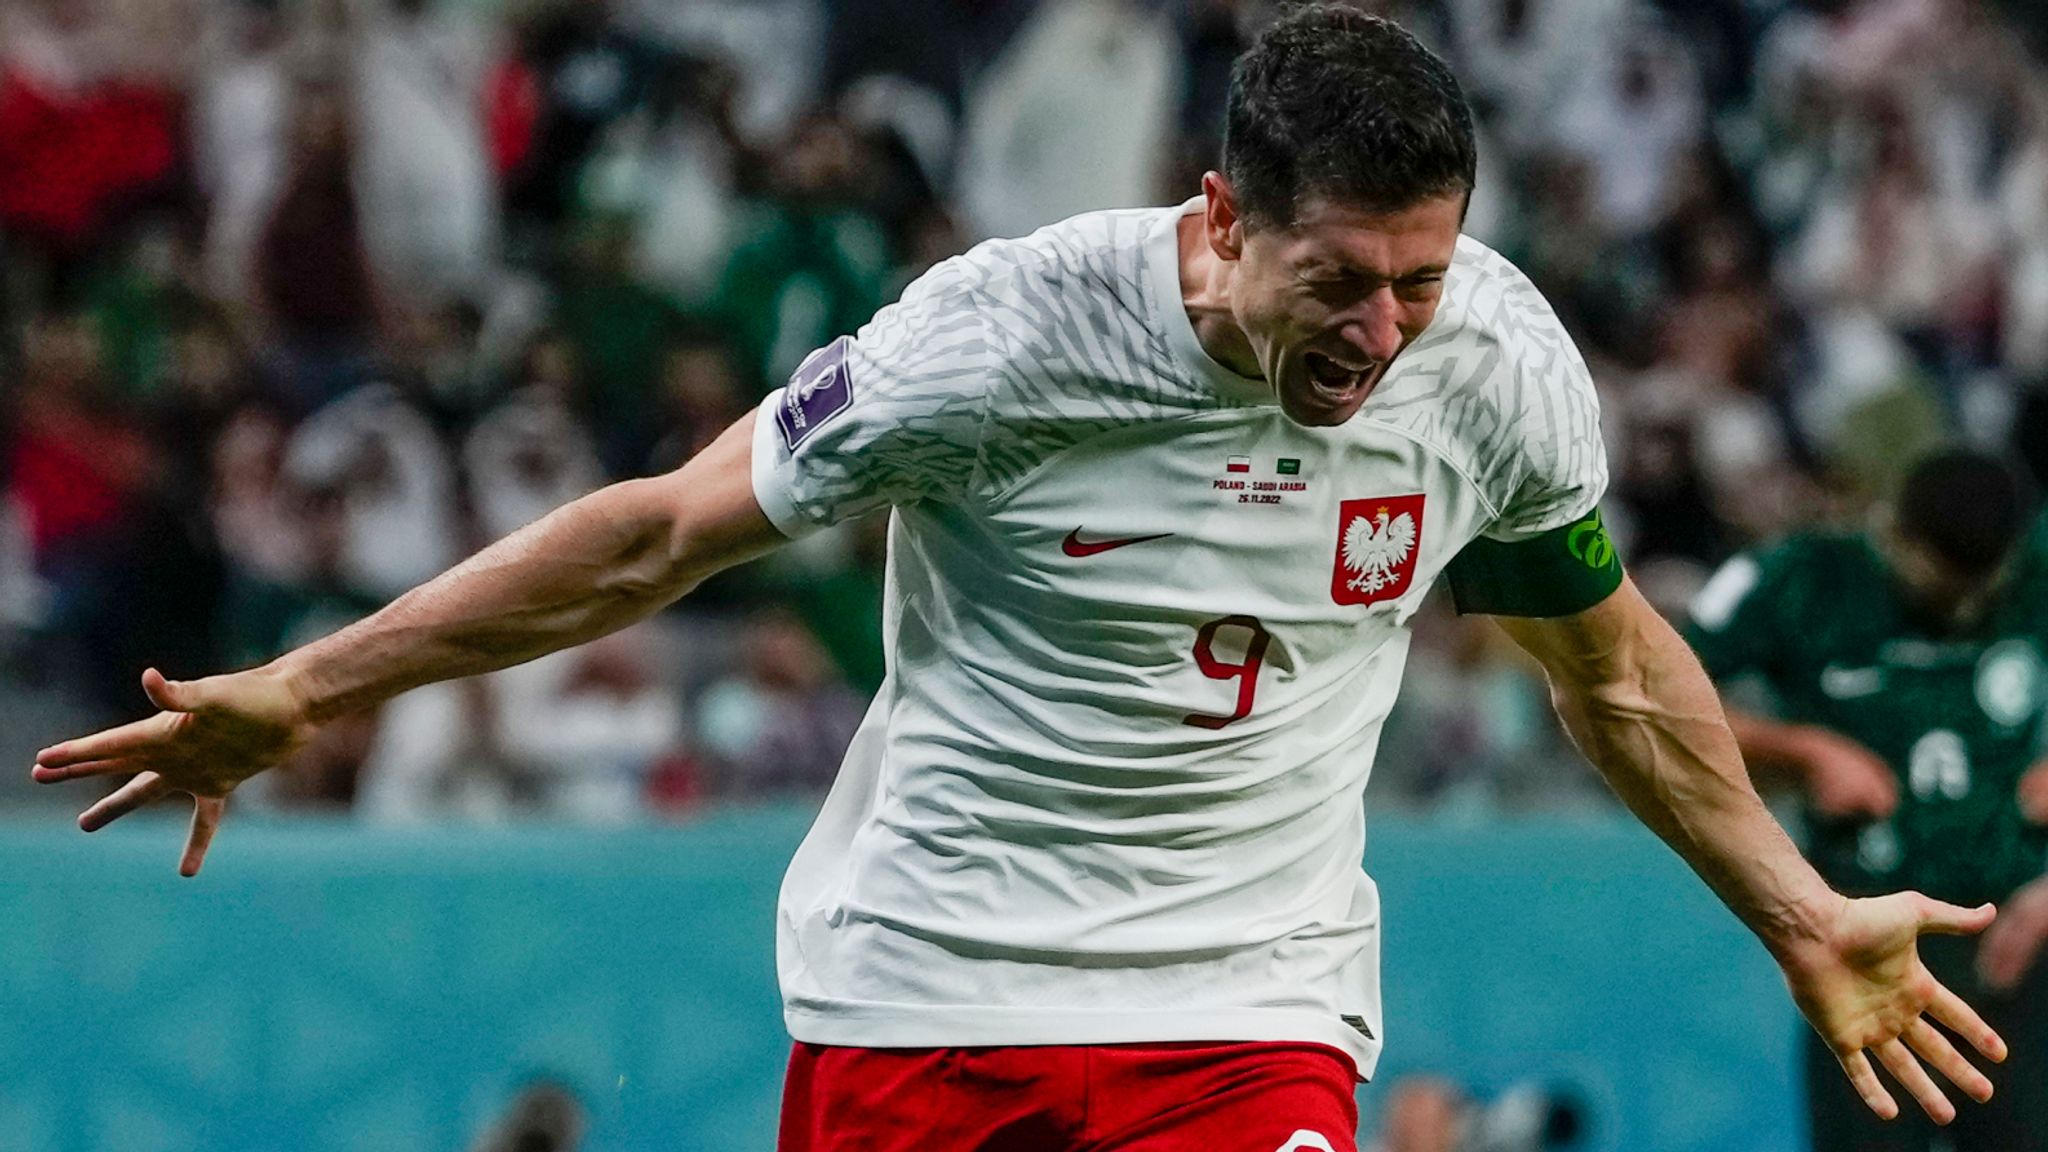 Poland 2-0 Saudi Arabia Robert Lewandowski scores first World Cup goal to send Poles top of Group C Football News Sky Sports